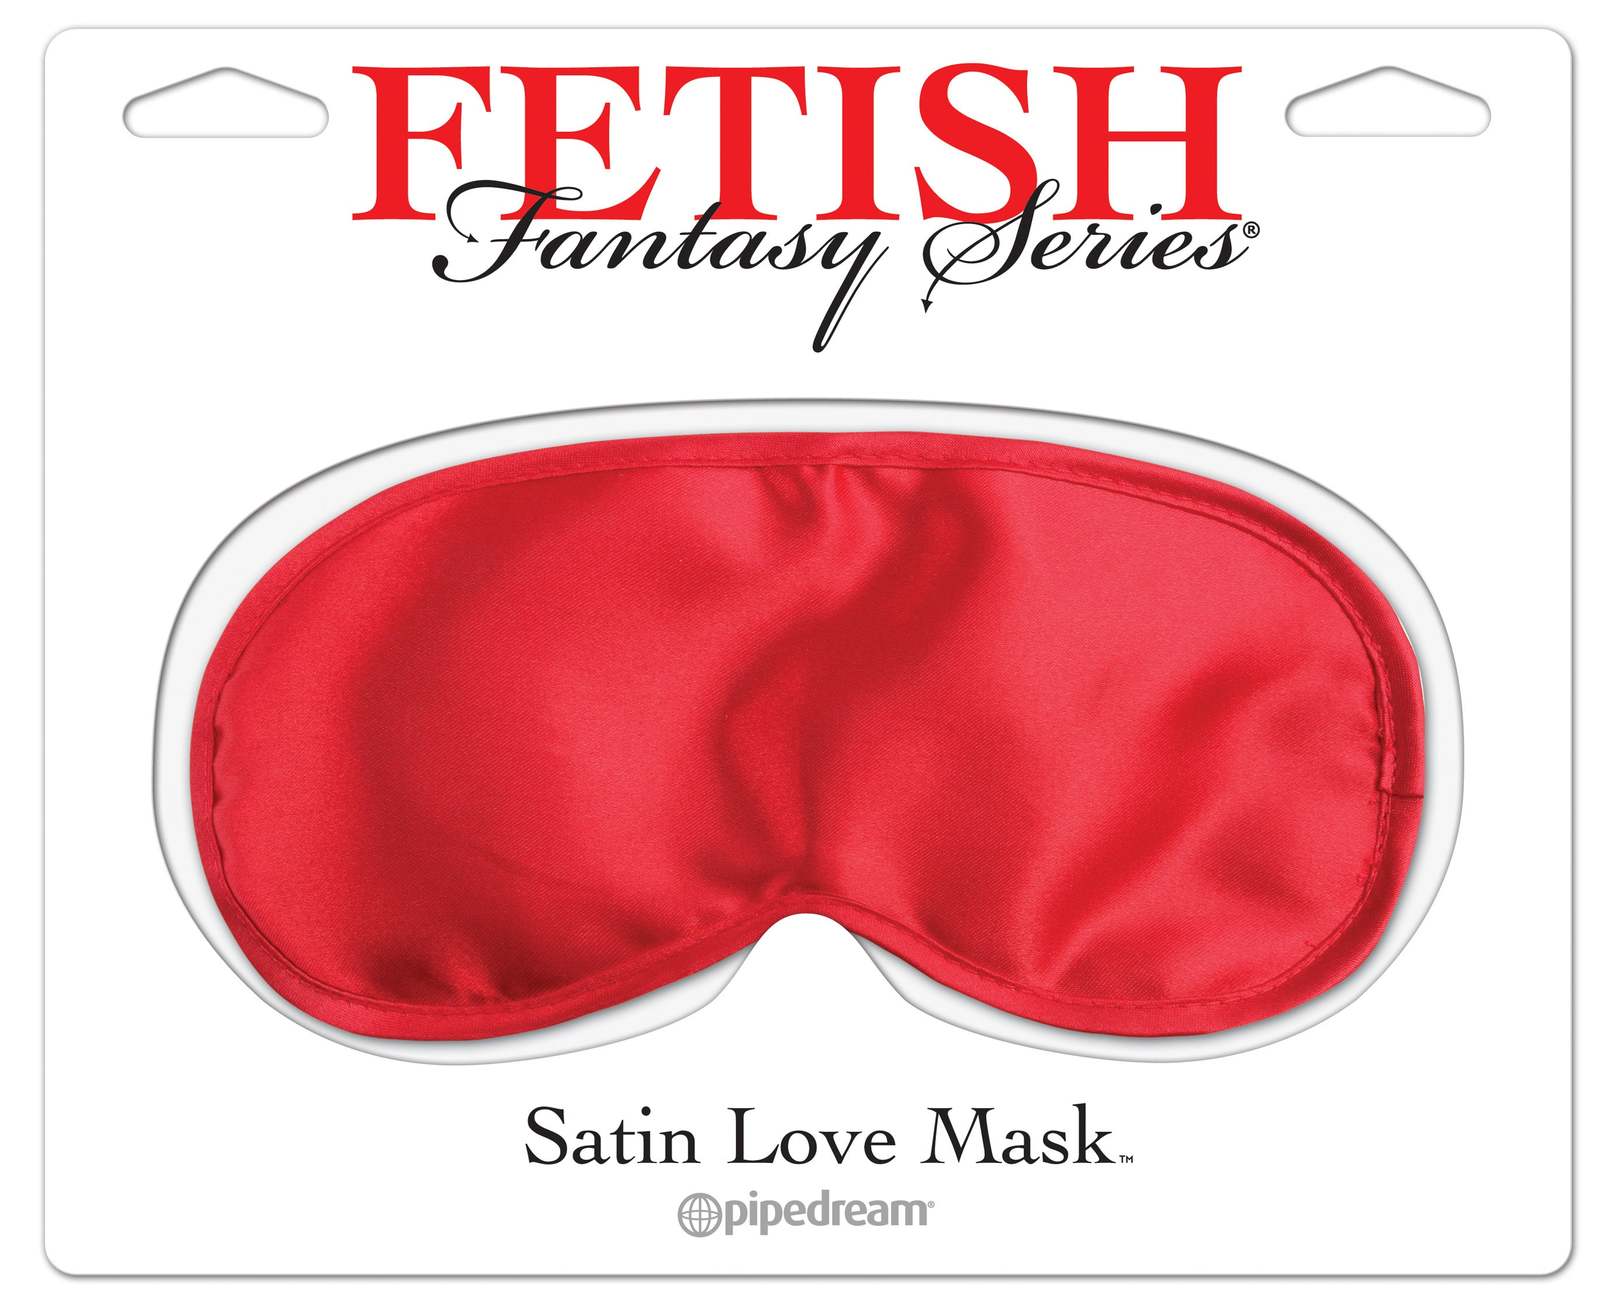 Fetish fantasy love mask-red satin - $29.13